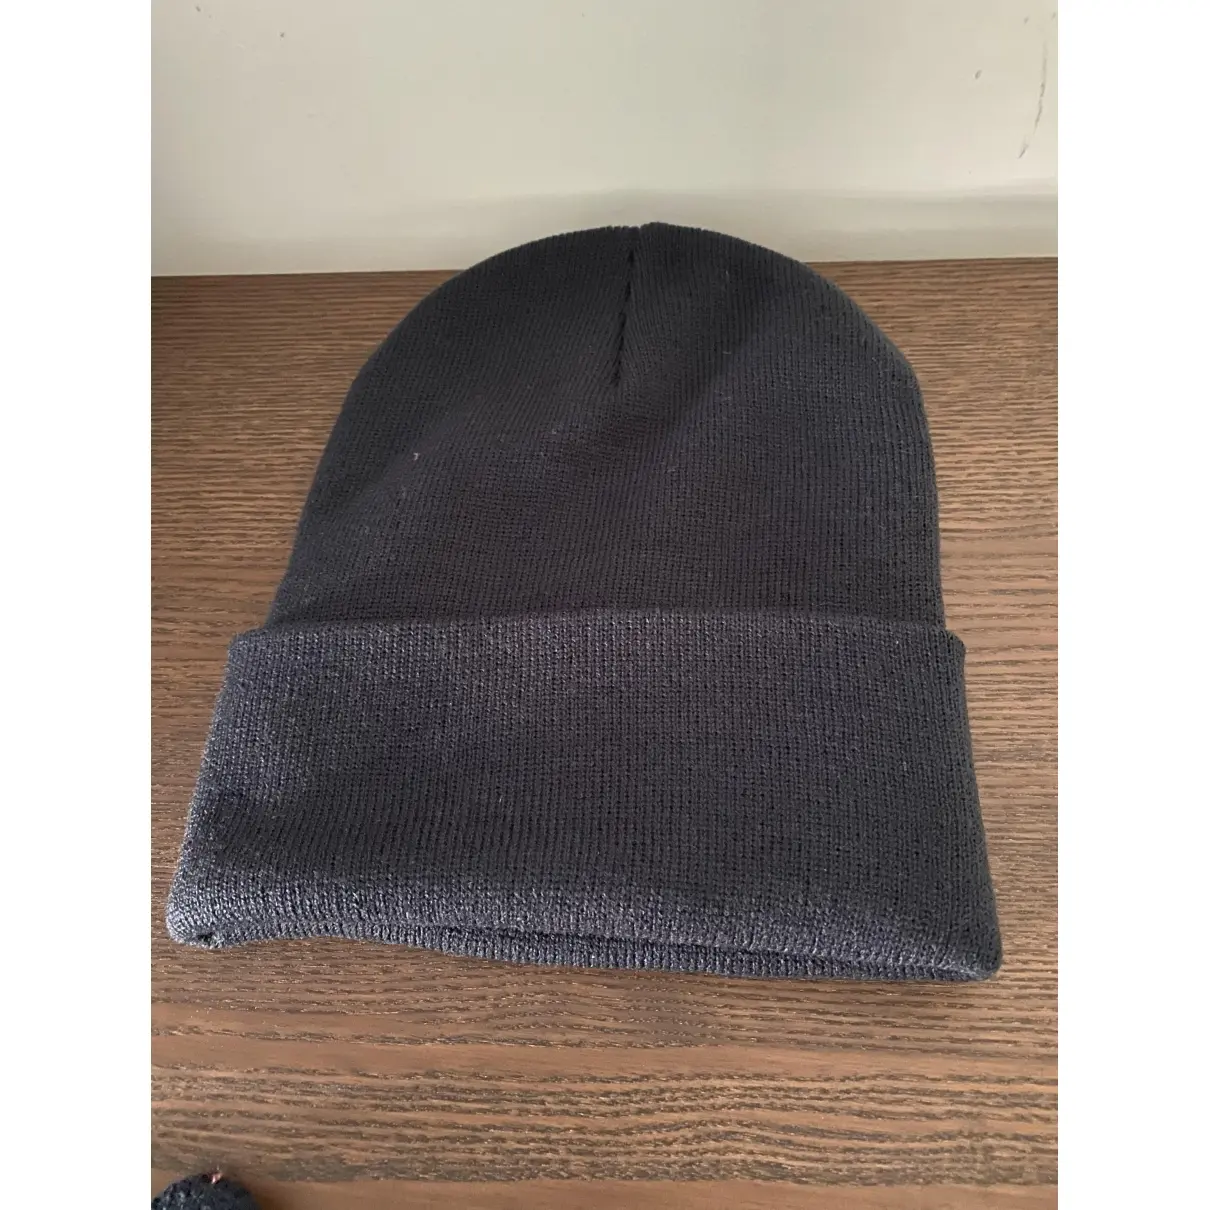 Carhartt Wool hat for sale